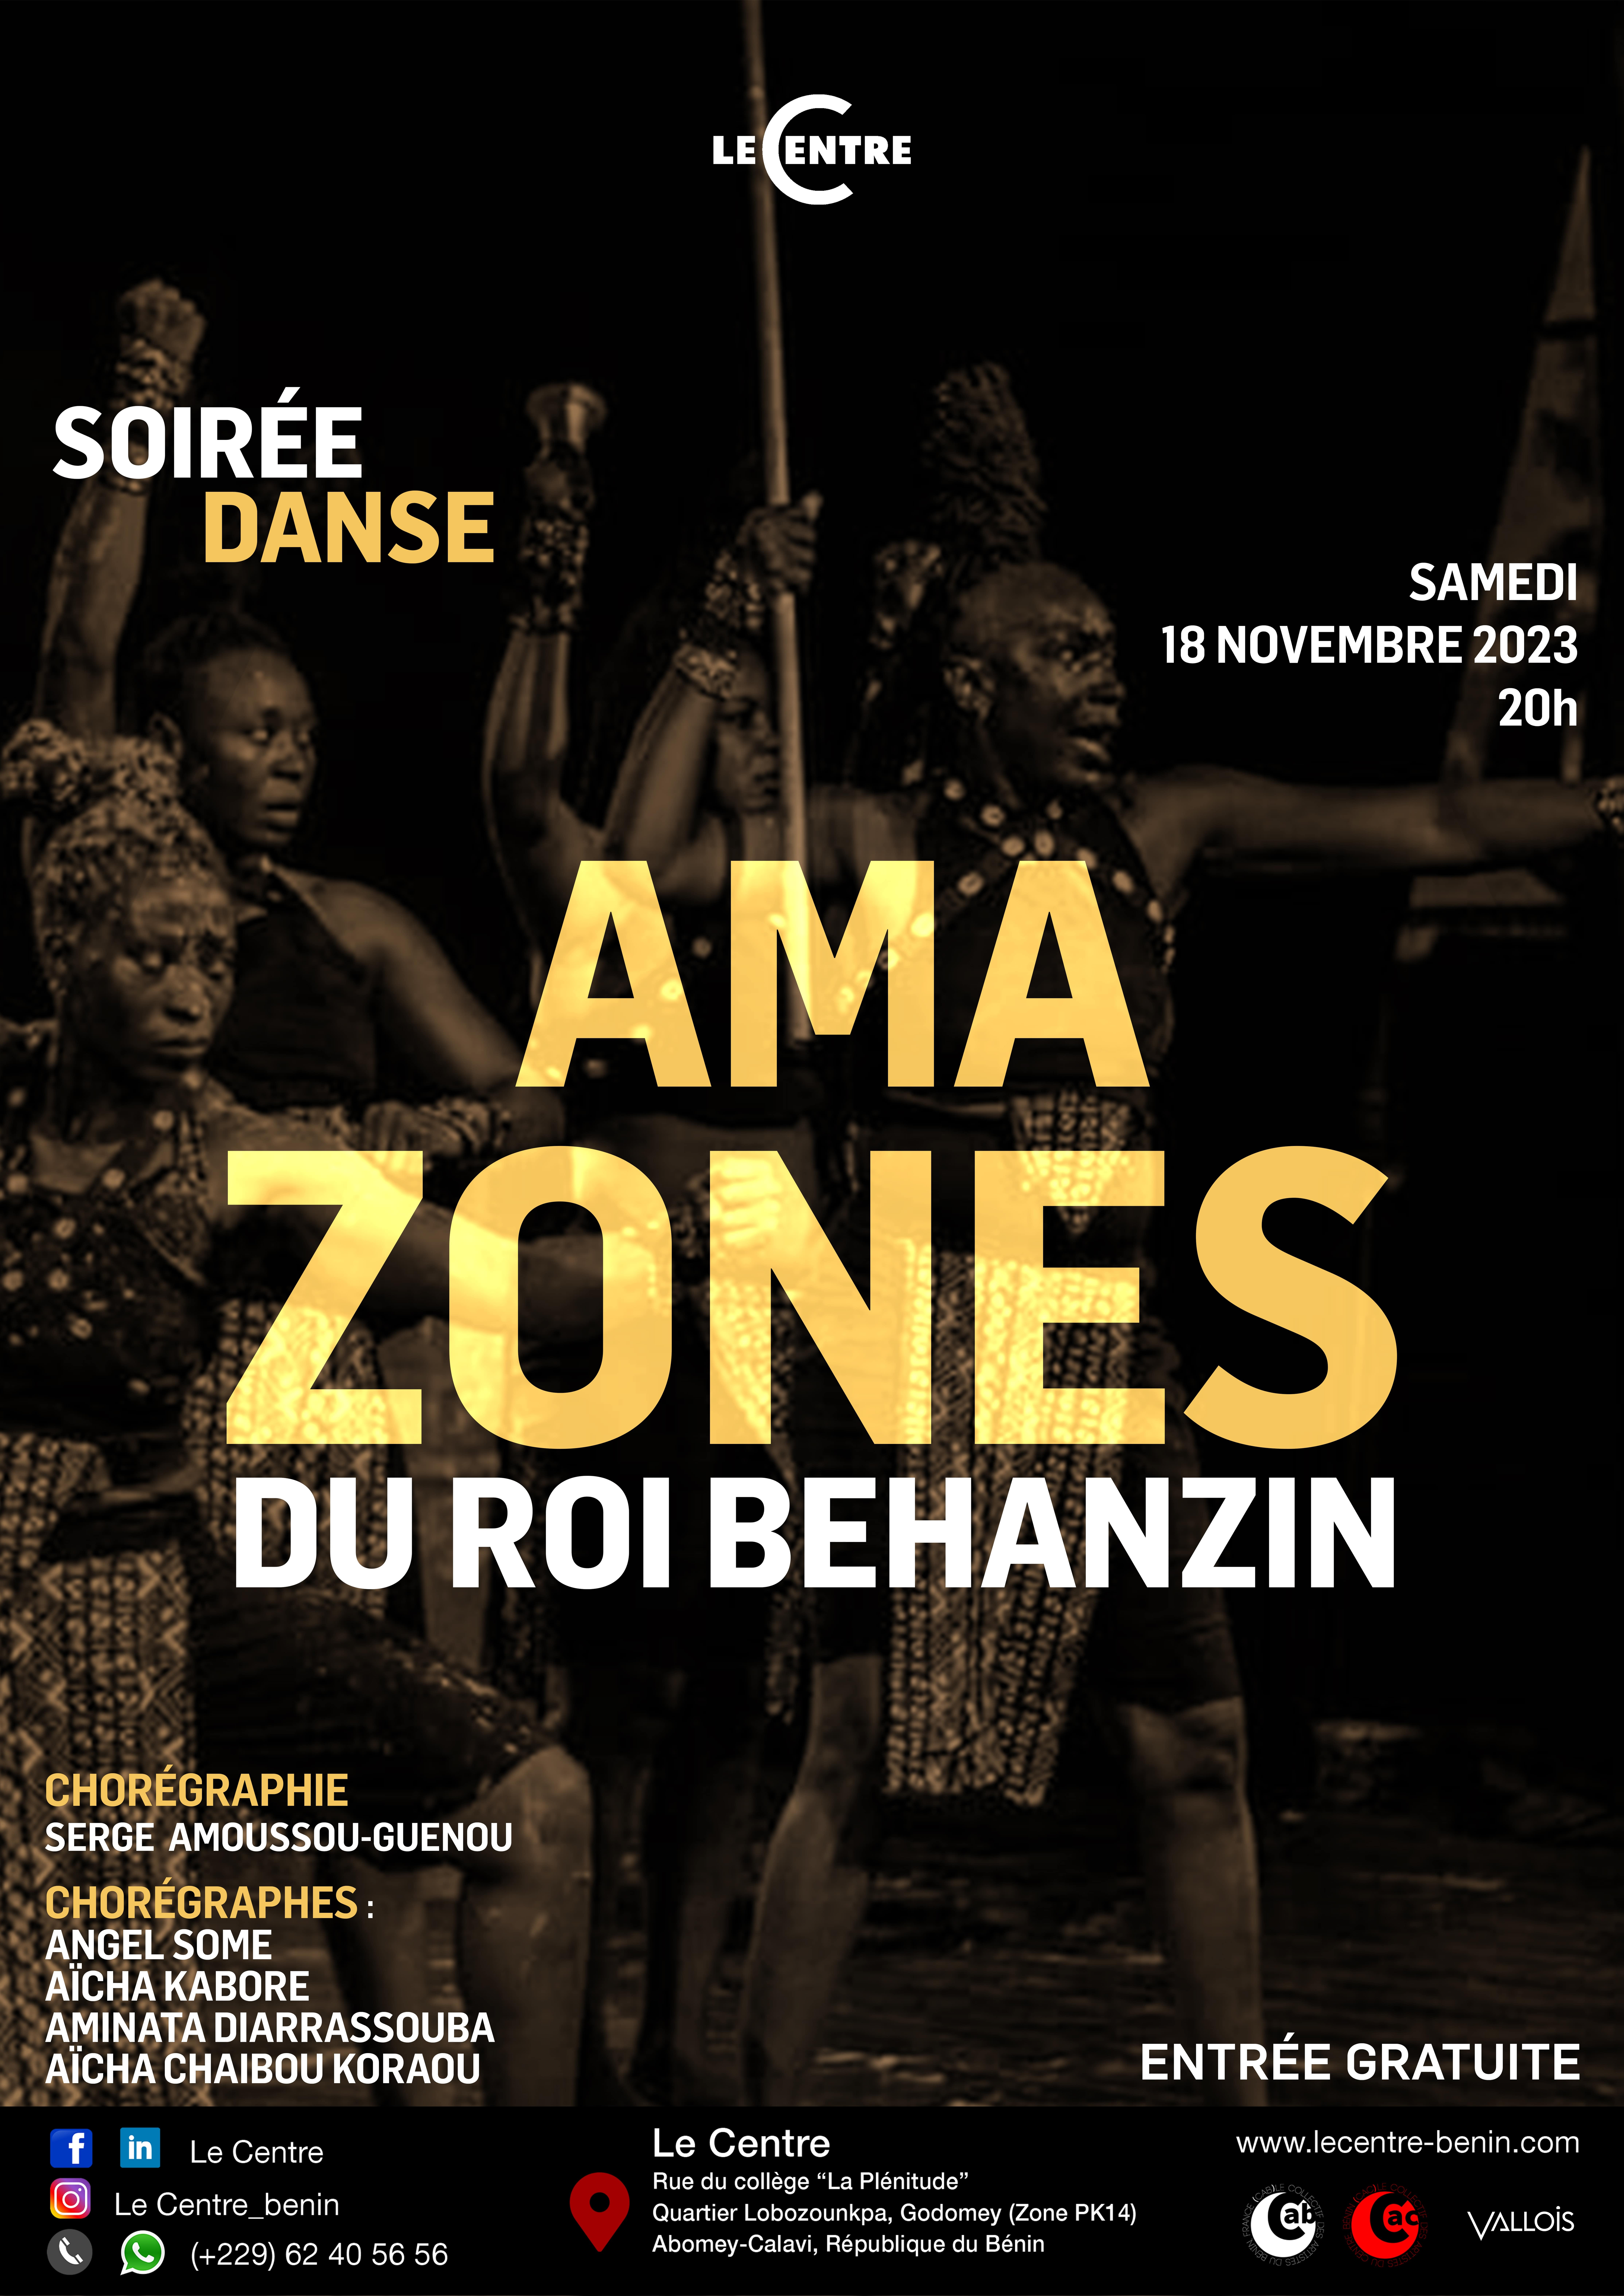 Serge Amoussou-Guenou, Aminata Diarrassouba, Aicha Kabore, Aicha Chaibou Koraou, Angel Some